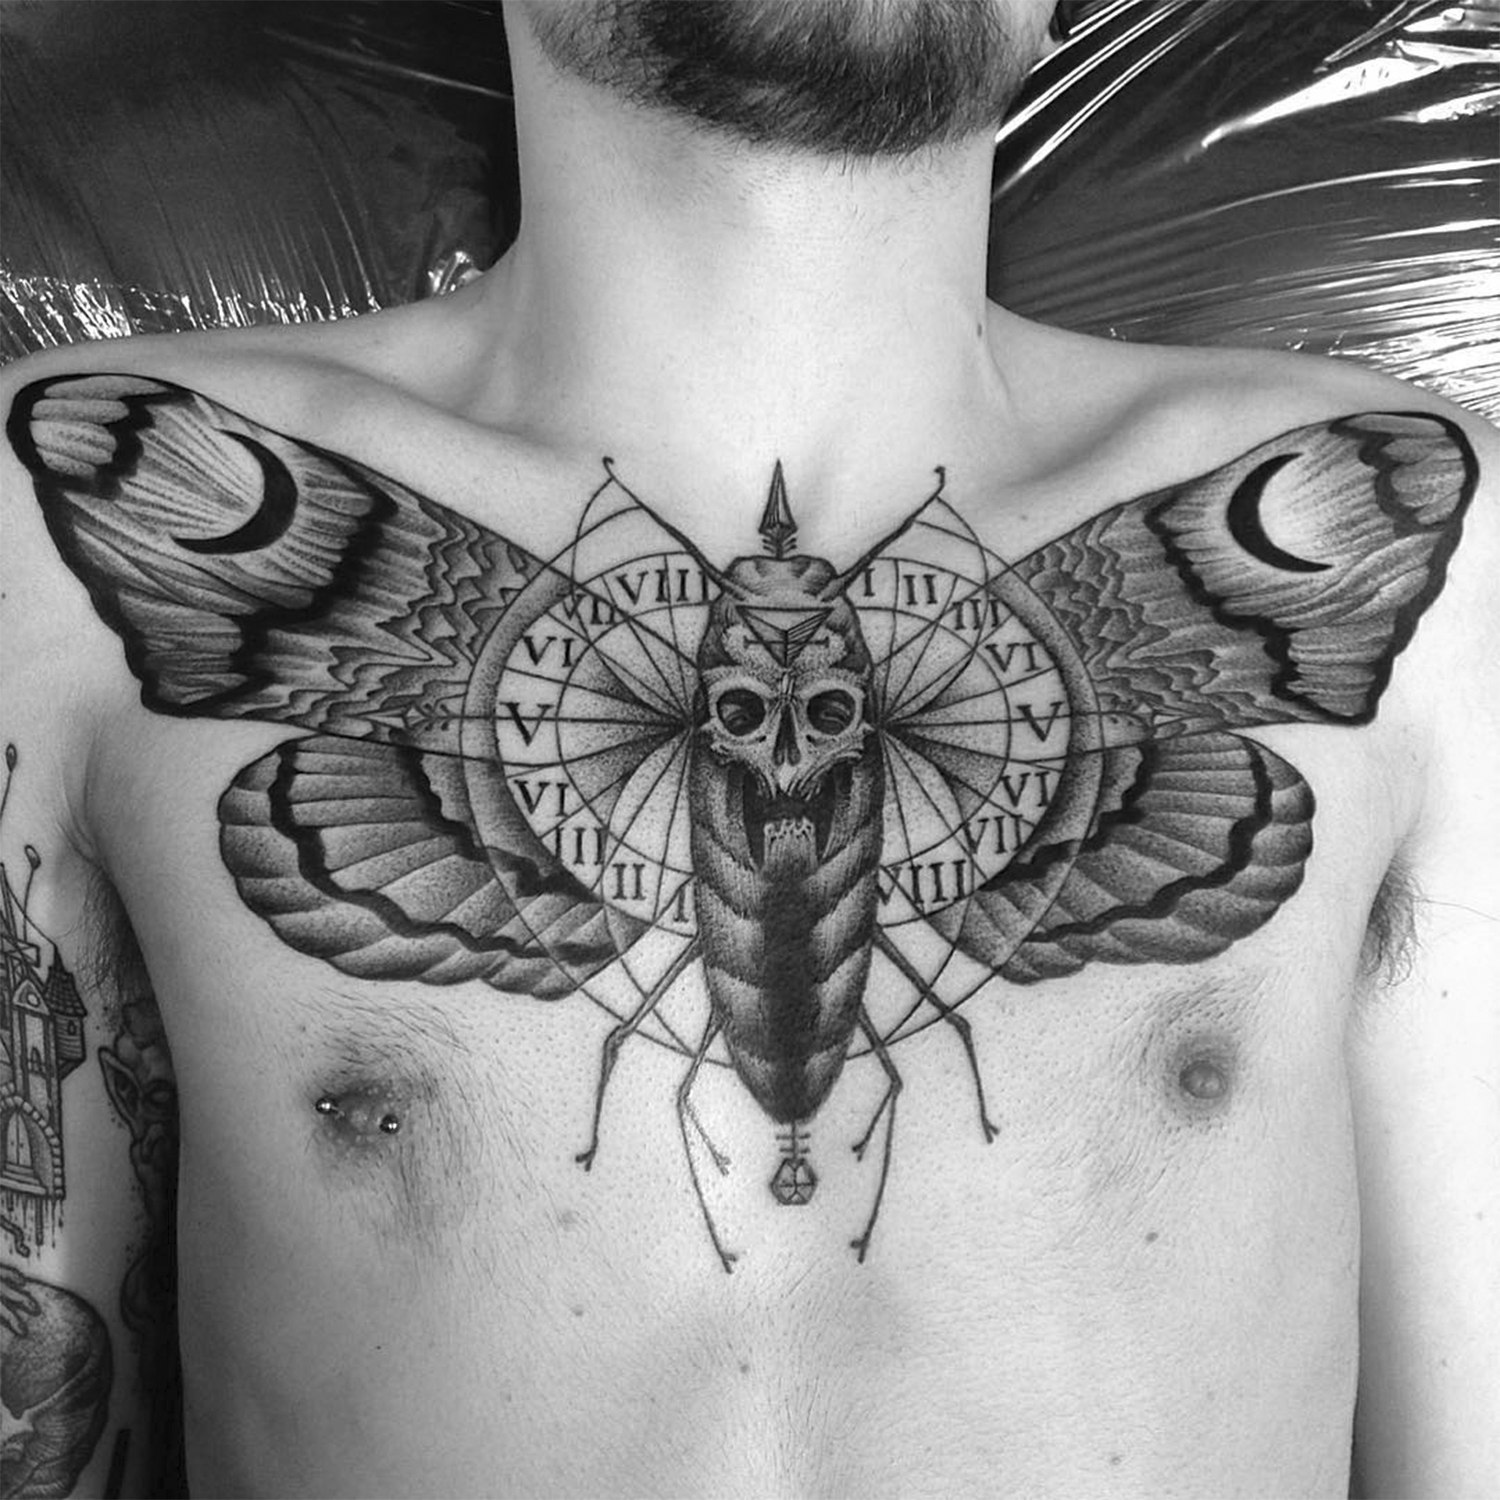 dødsmøl-tatovering af MaxAmos